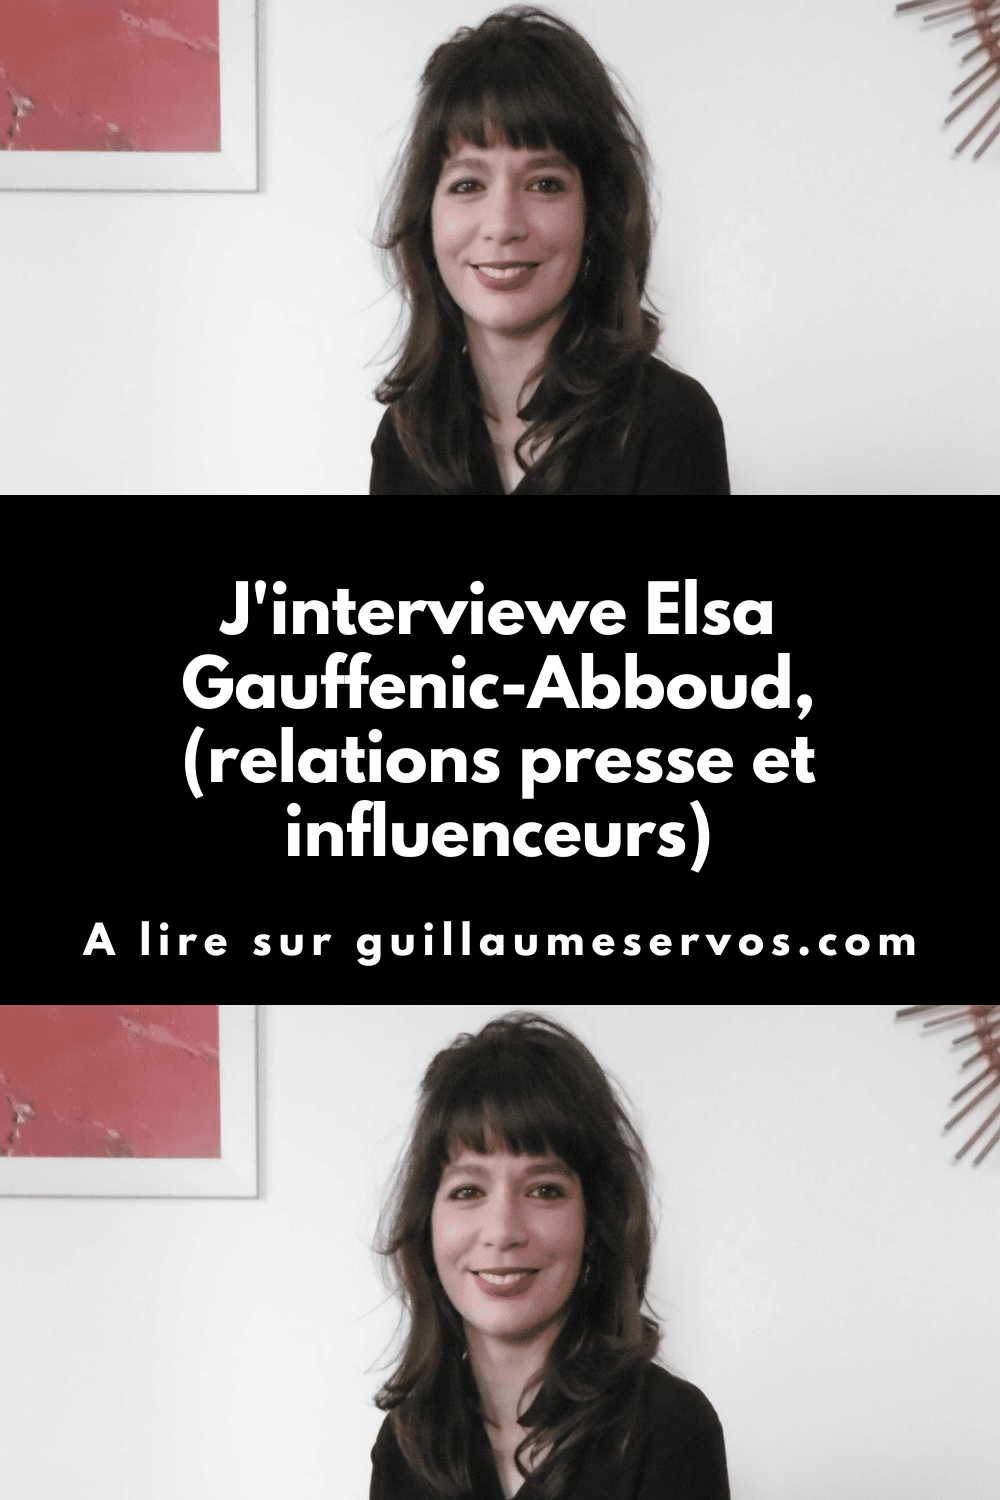 J'interviewe Elsa Gauffenic-Abboud, Consultante relations presse et influenceurs